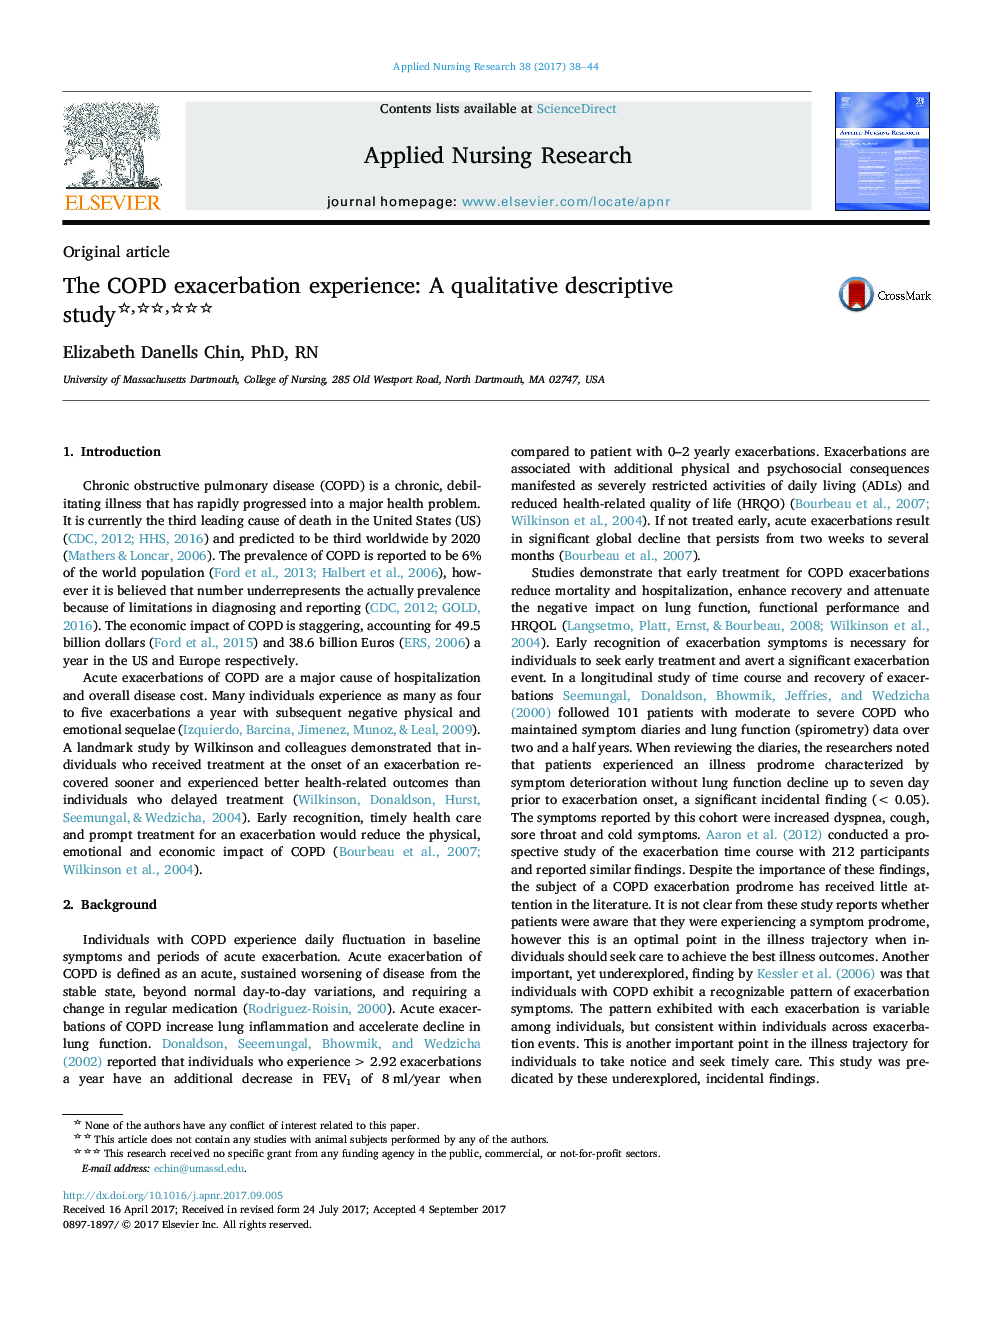 The COPD exacerbation experience: A qualitative descriptive study